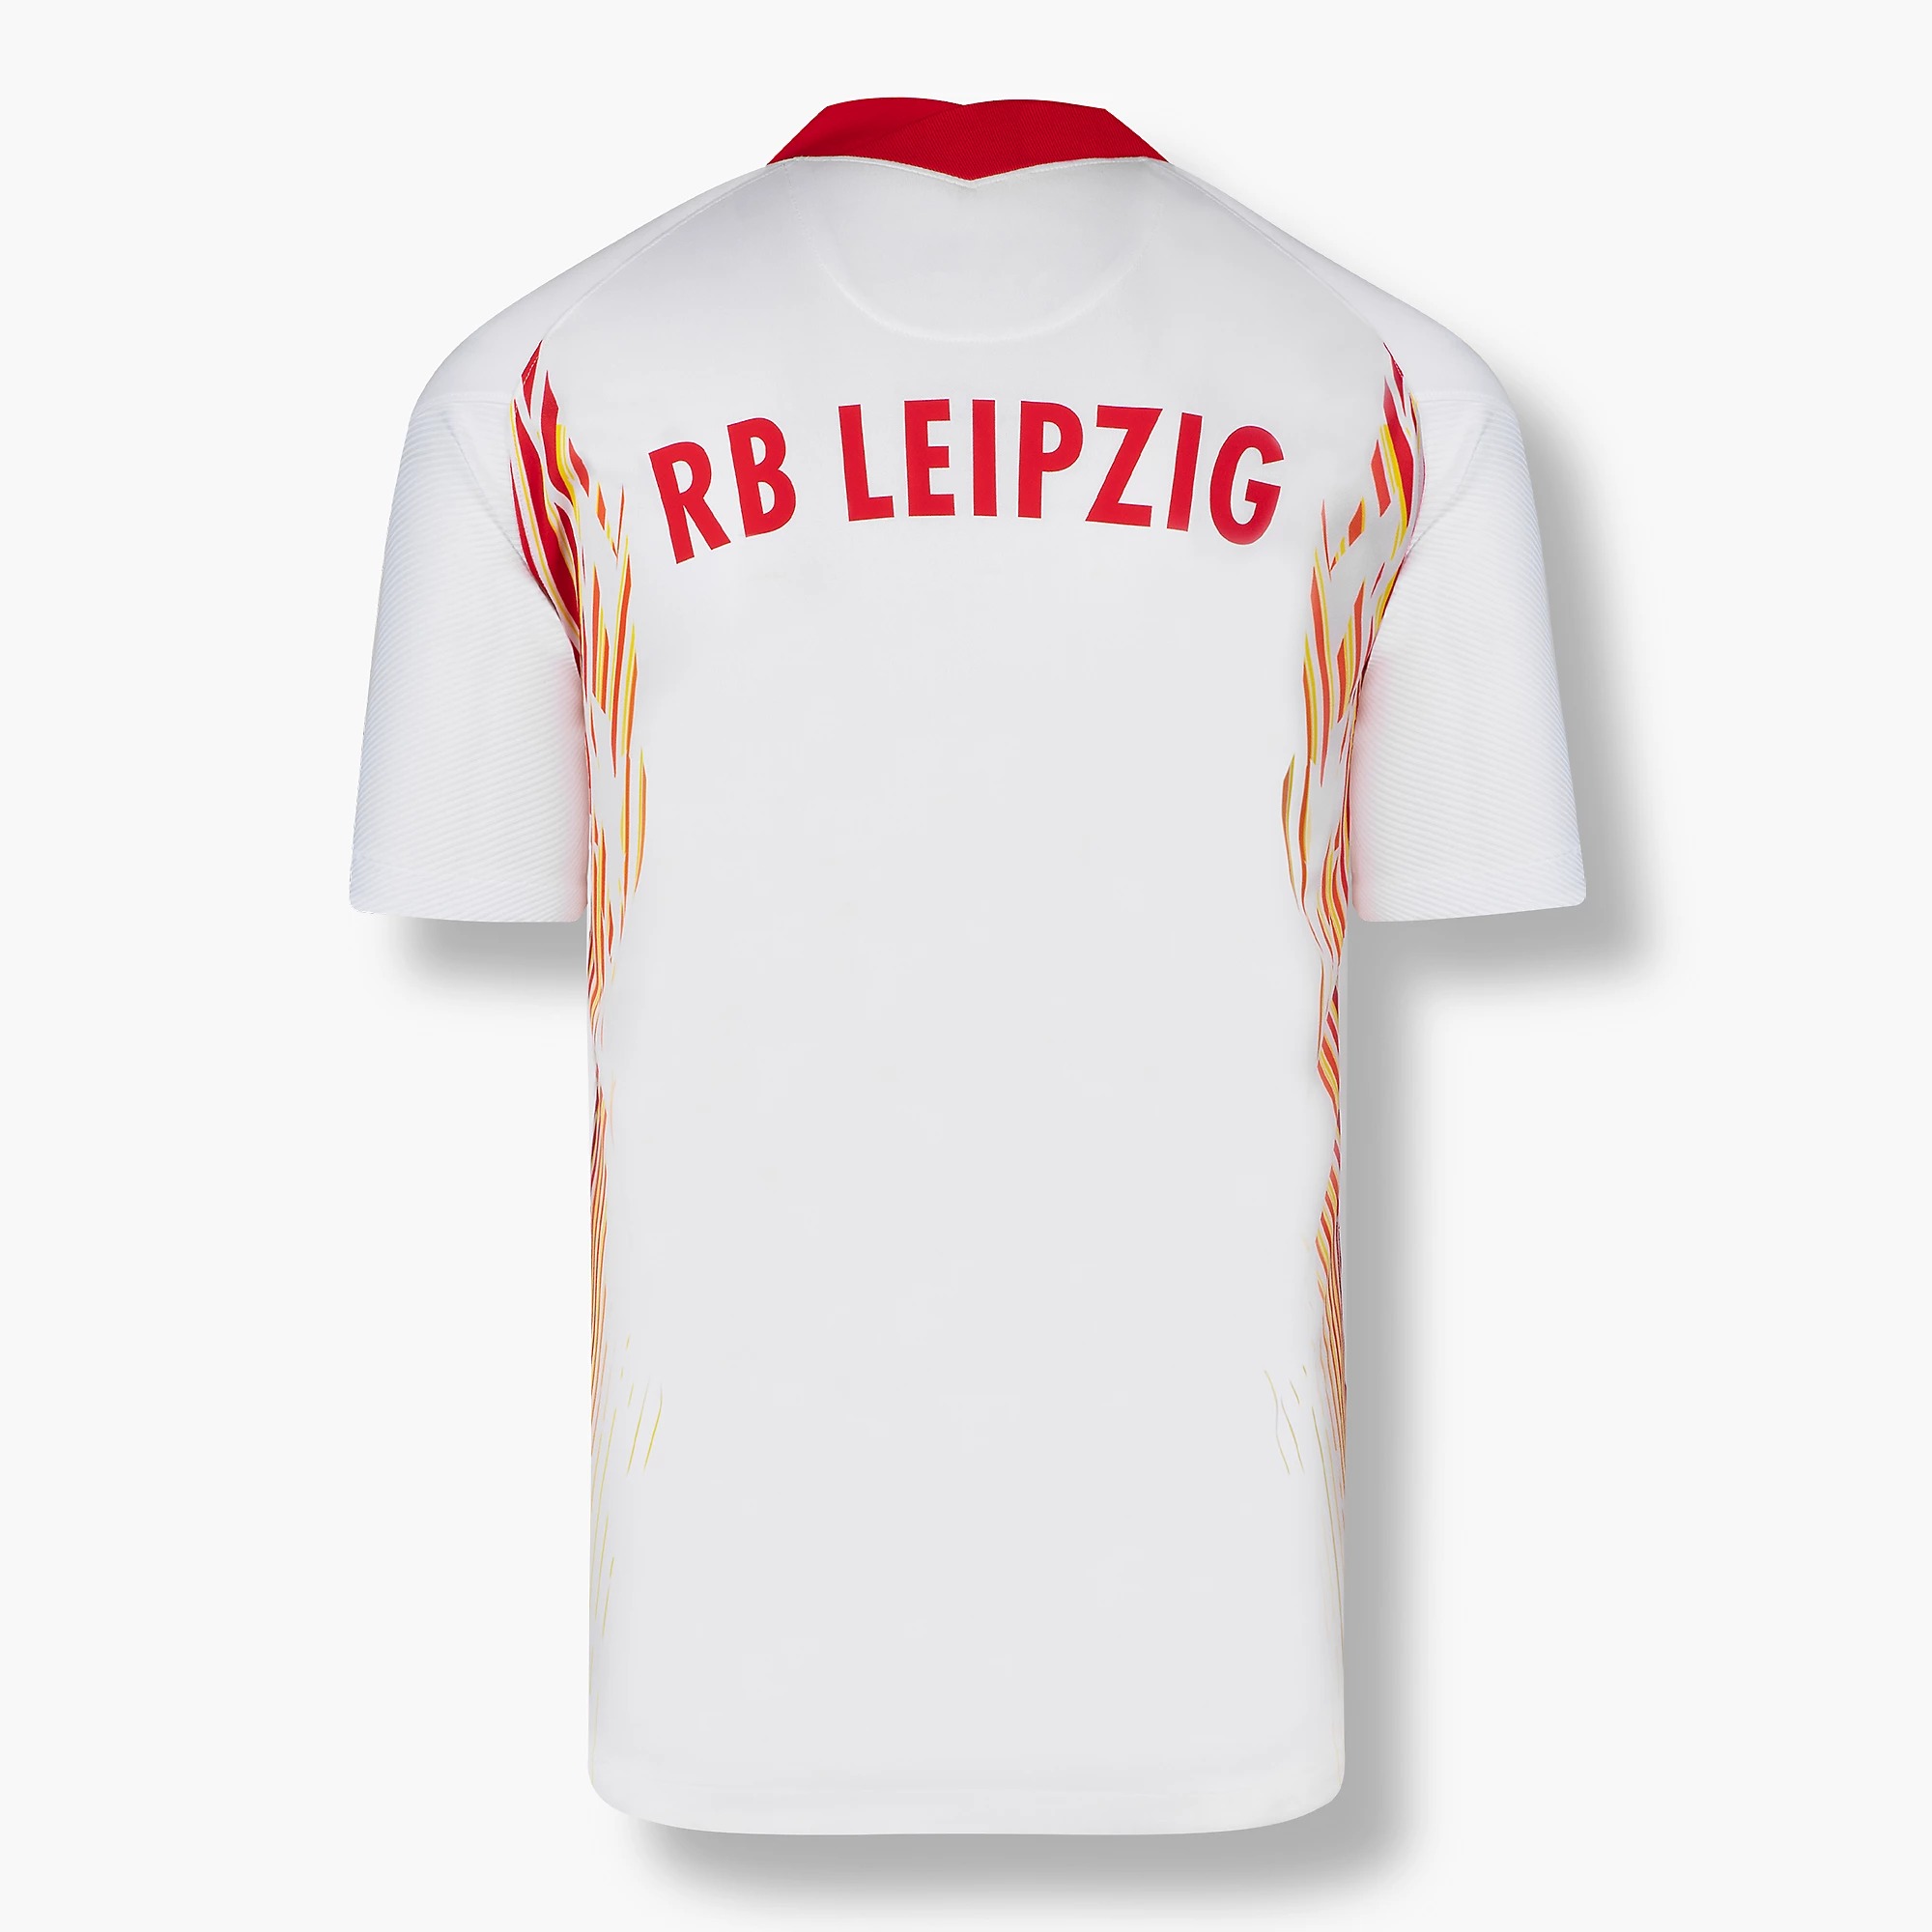 RB Leipzig Home Kit 2020/2021 - Soccer Jersey 21